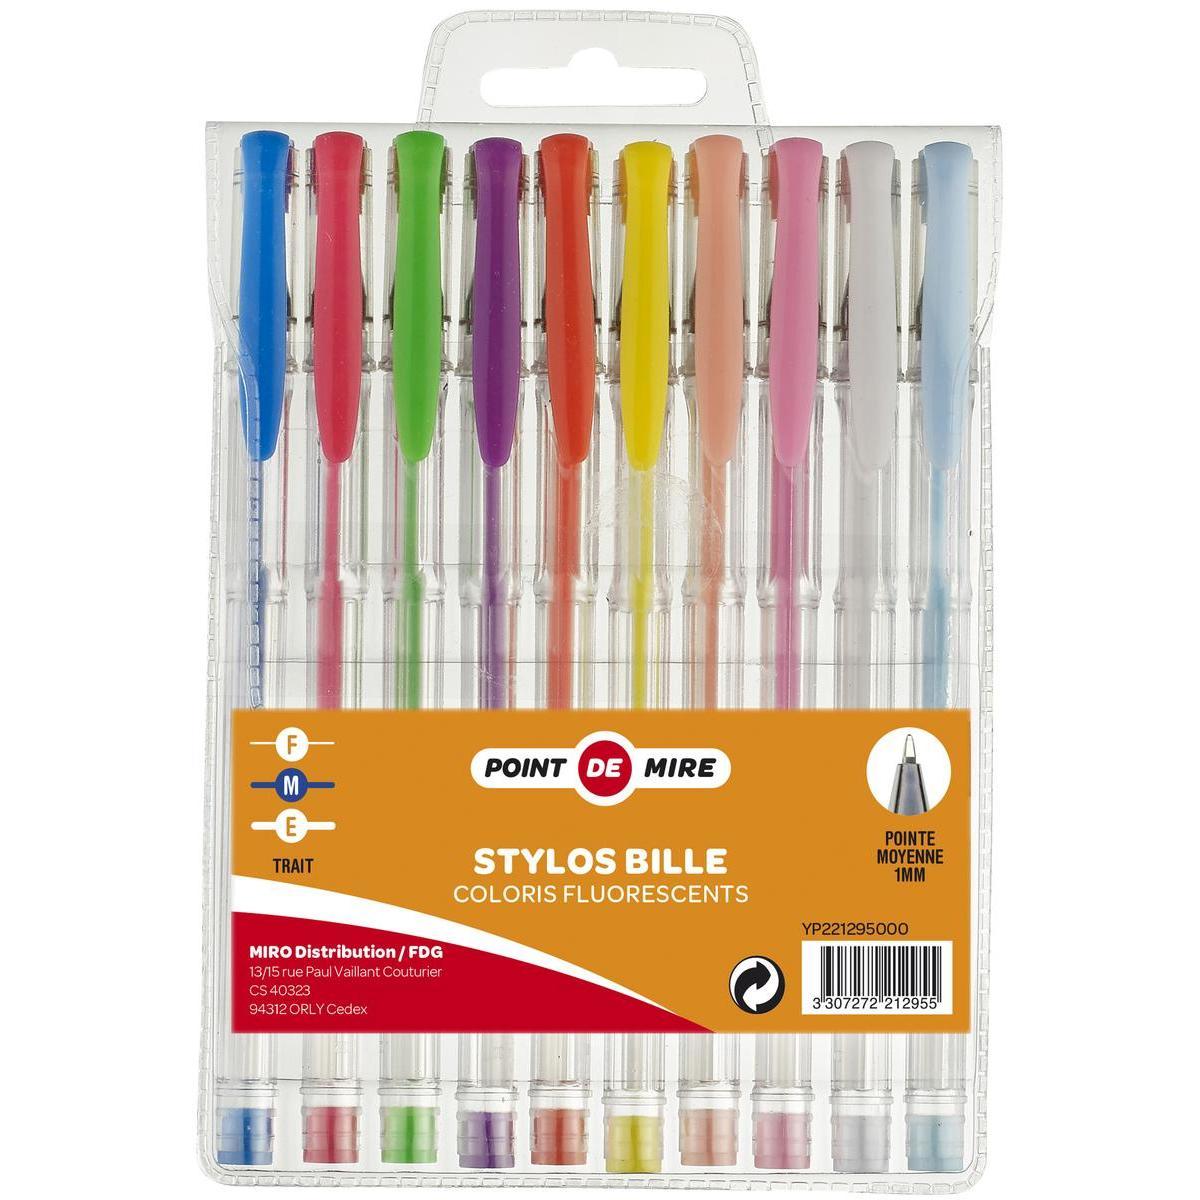 10 stylos billes fluorescents